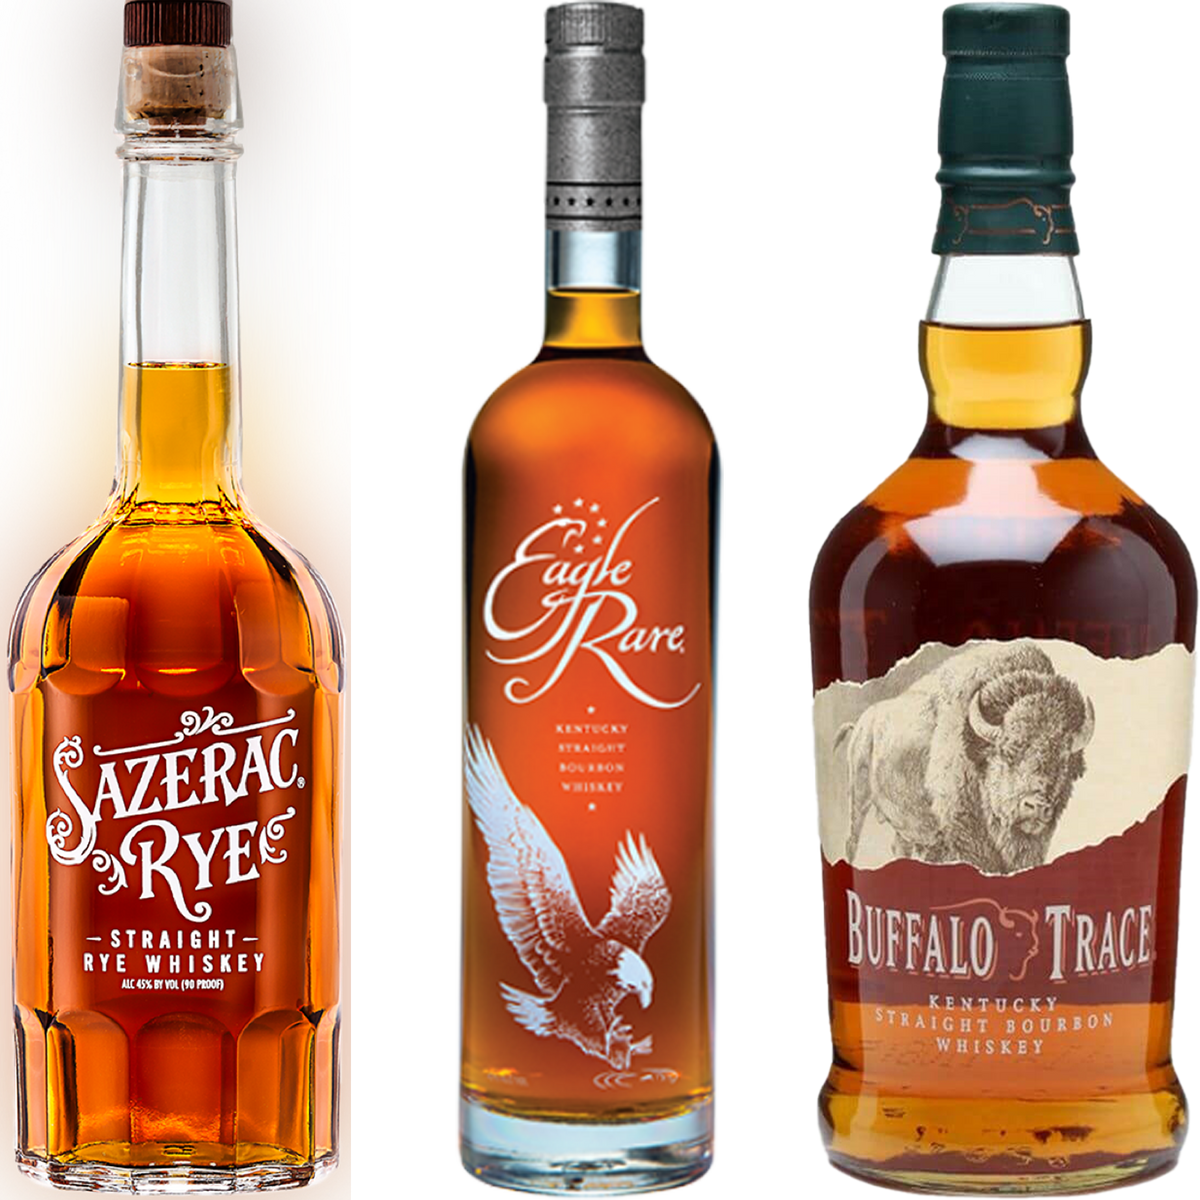 Share a Buffalo Trace Bourbon Whiskey & Cigar Gift Set Online!